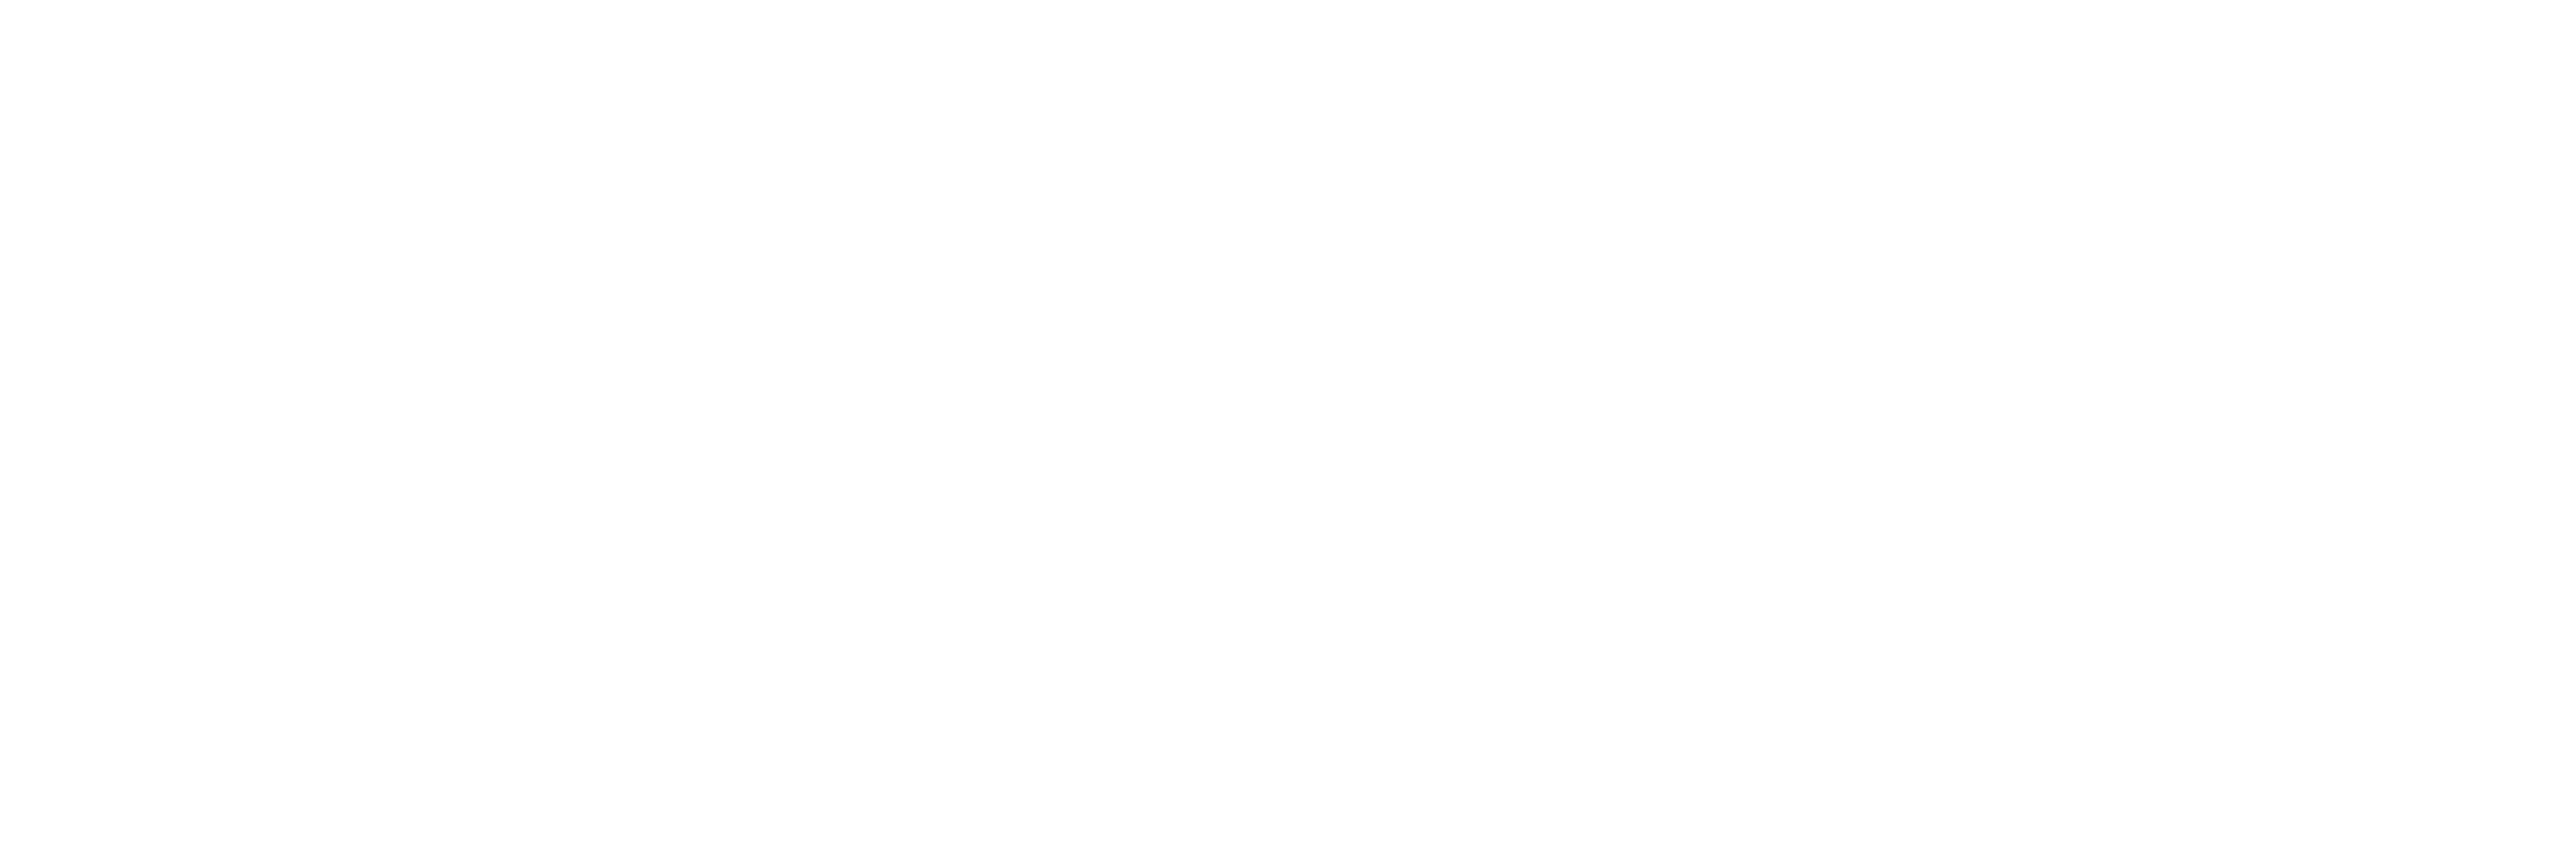 Raven Optical Management Software